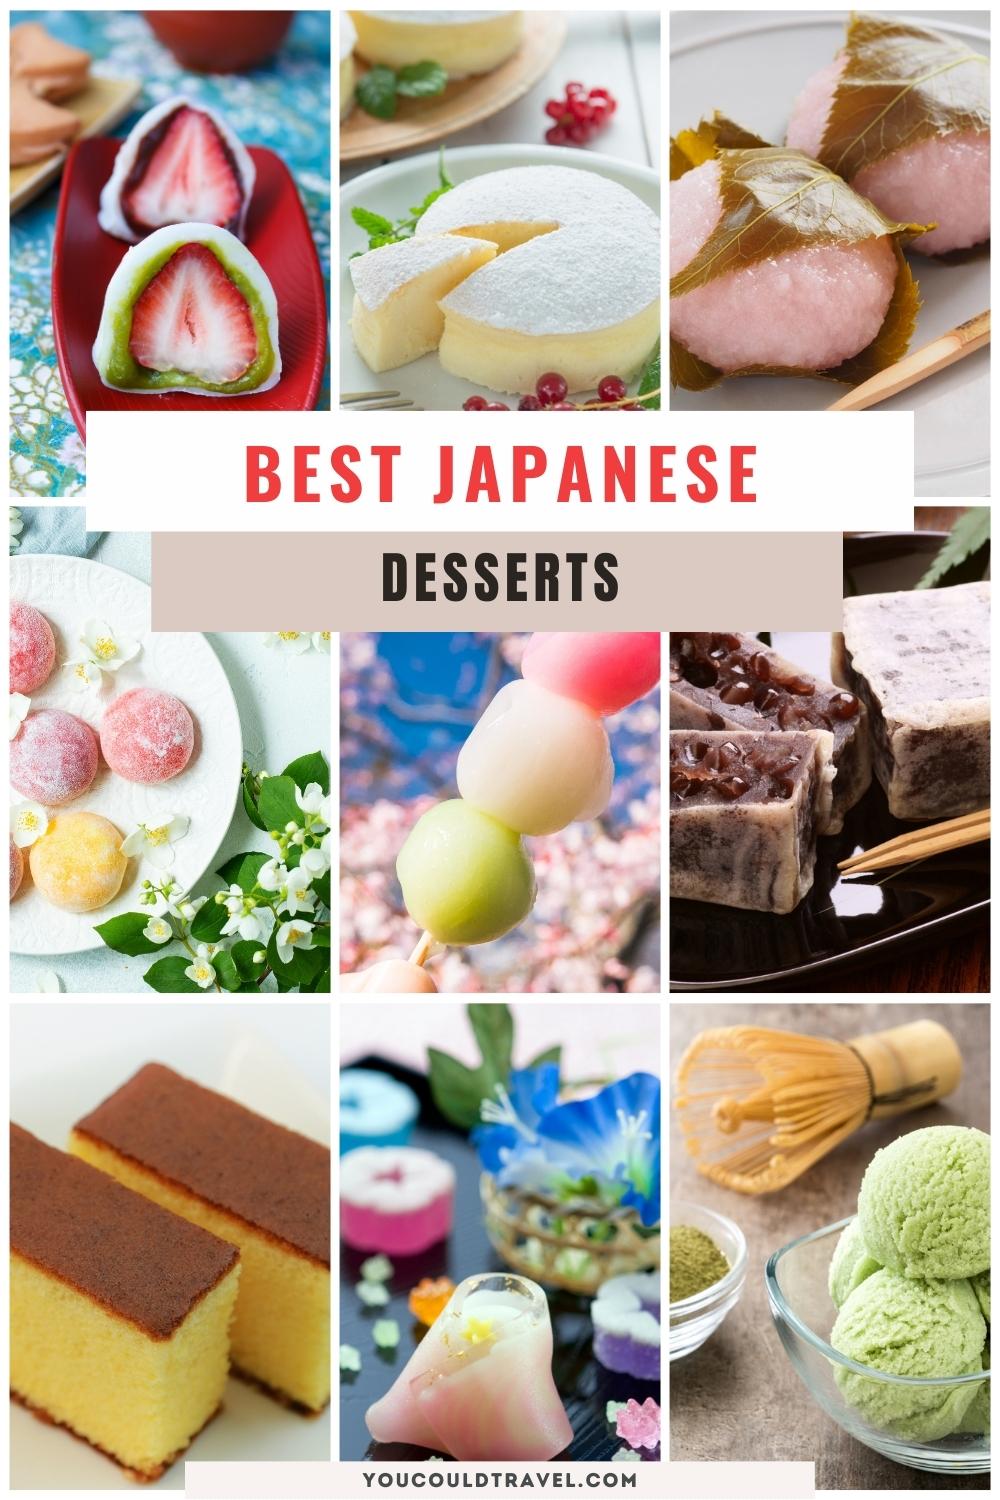 Top Japanese desserts